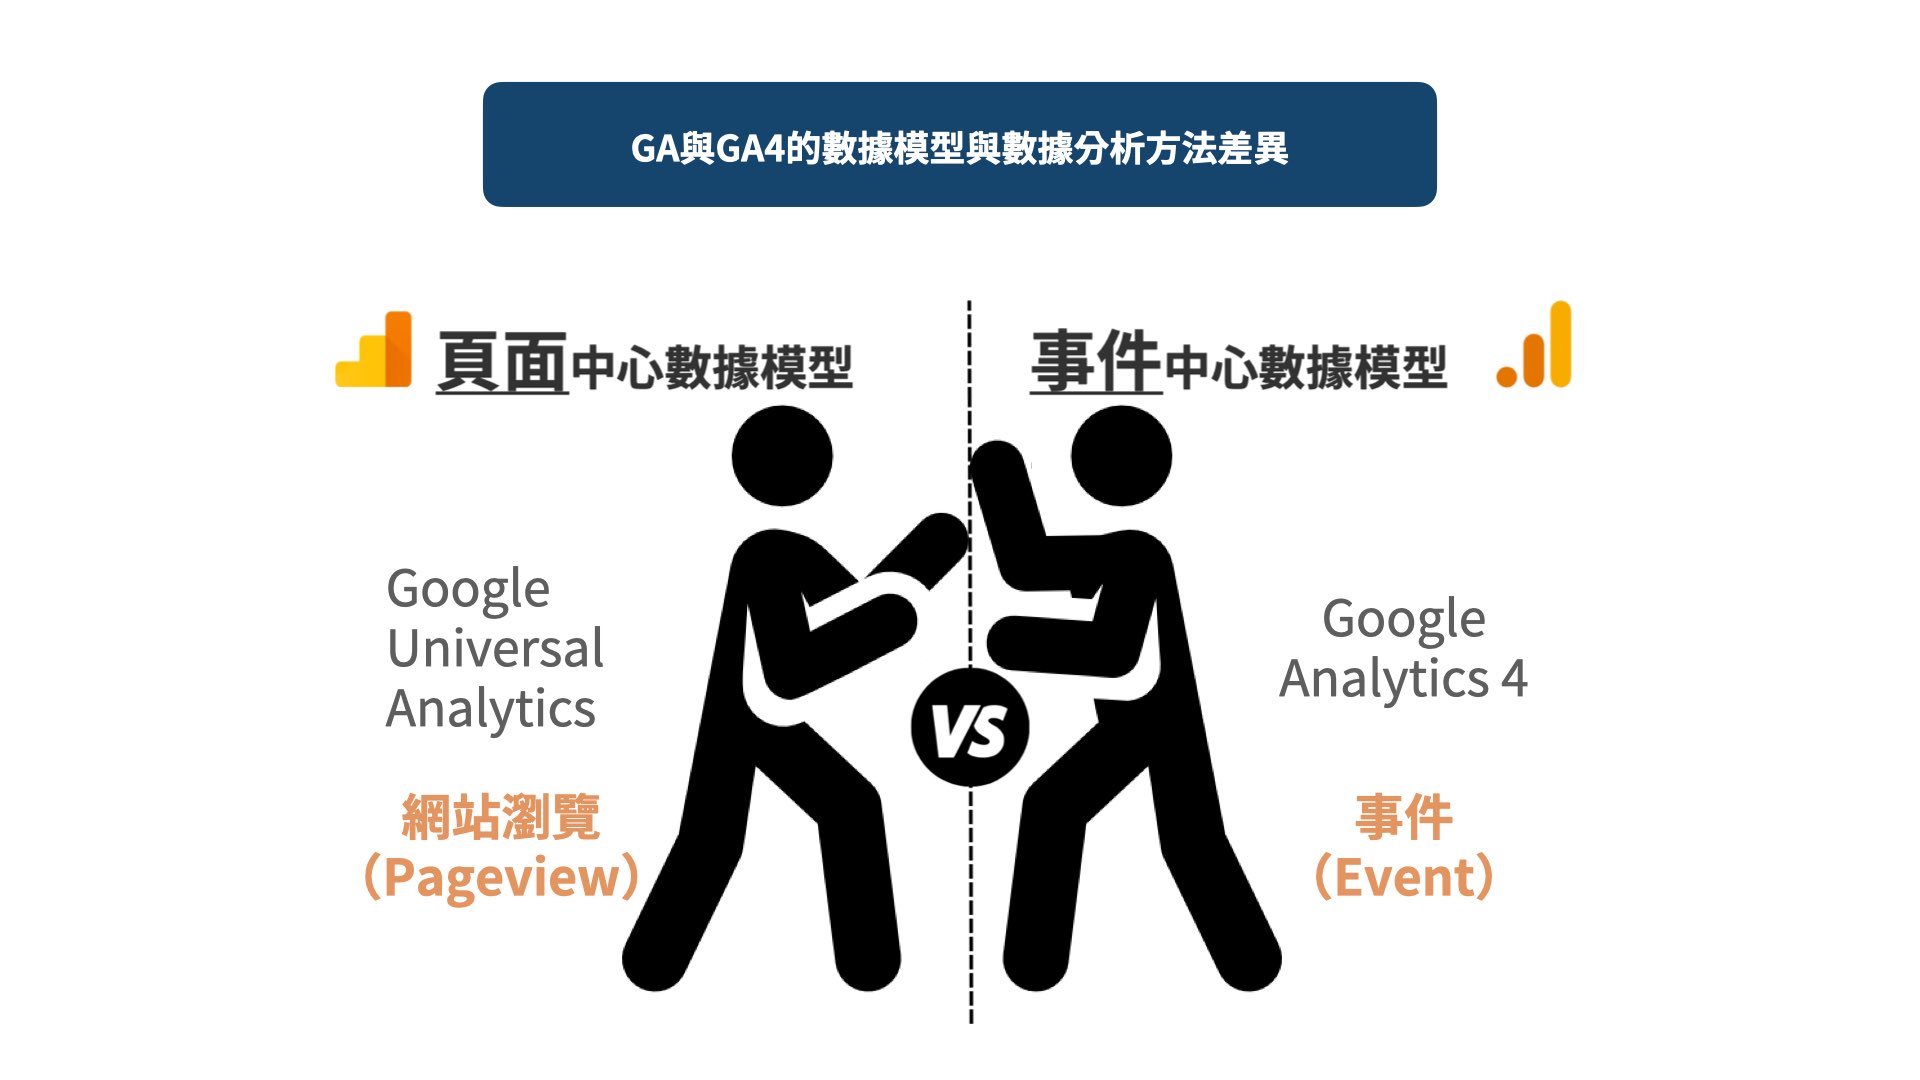 Google Analytics 4 的數據模型與數據分析方法不同